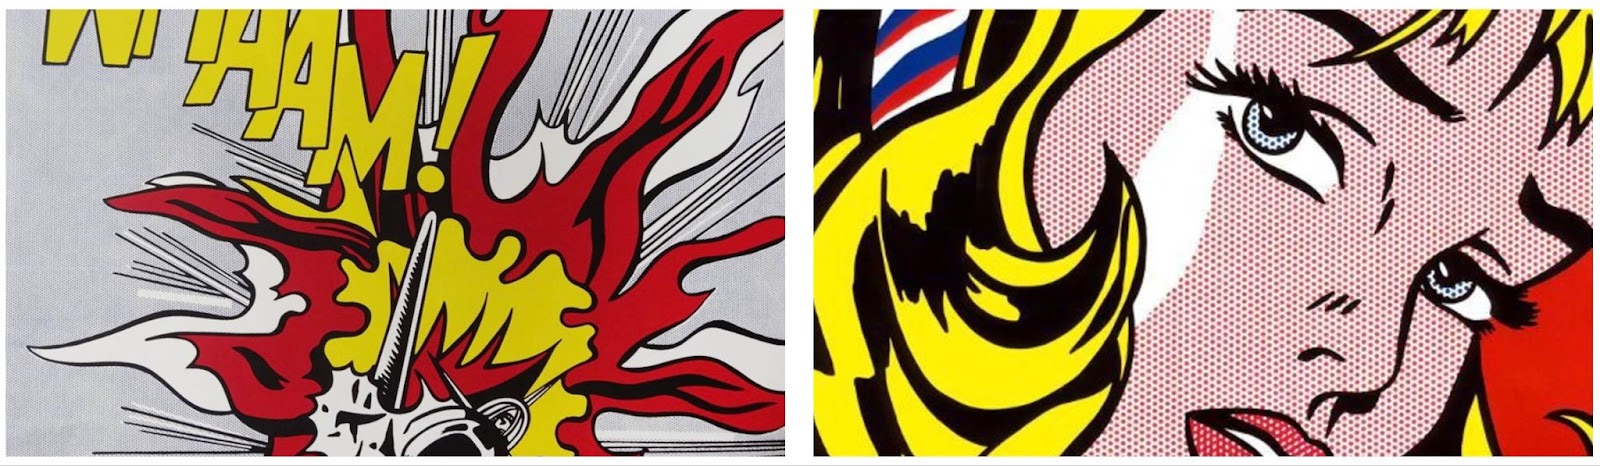 ¡Whaam! de Roy Lichtenstein. (1963) y Niña que llora (1963)